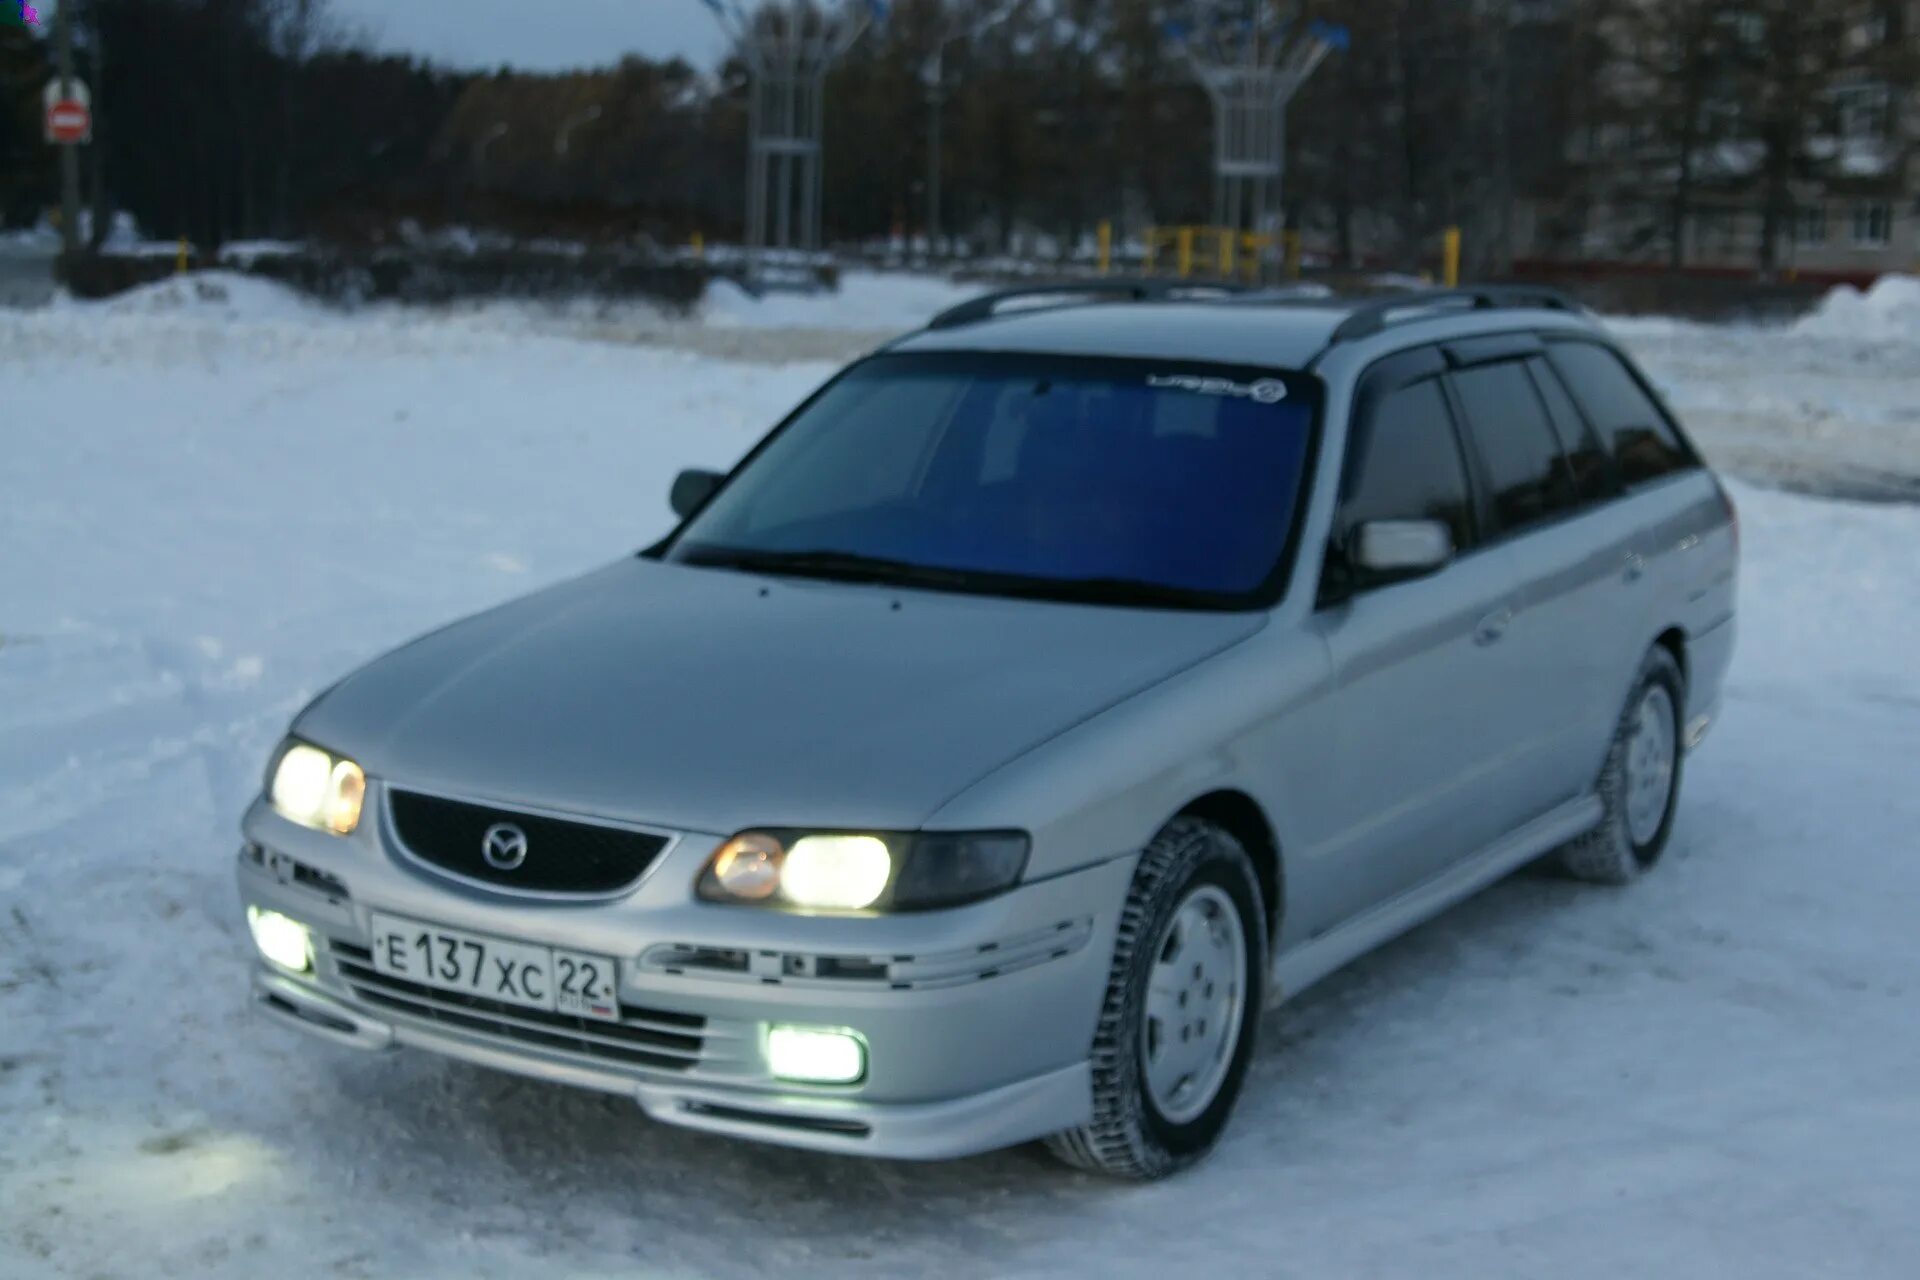 Mazda Capella 1998. Мазда капелла 1998 универсал. Мазда капелла 1998 1.8. Мазда капелла 1999 универсал.